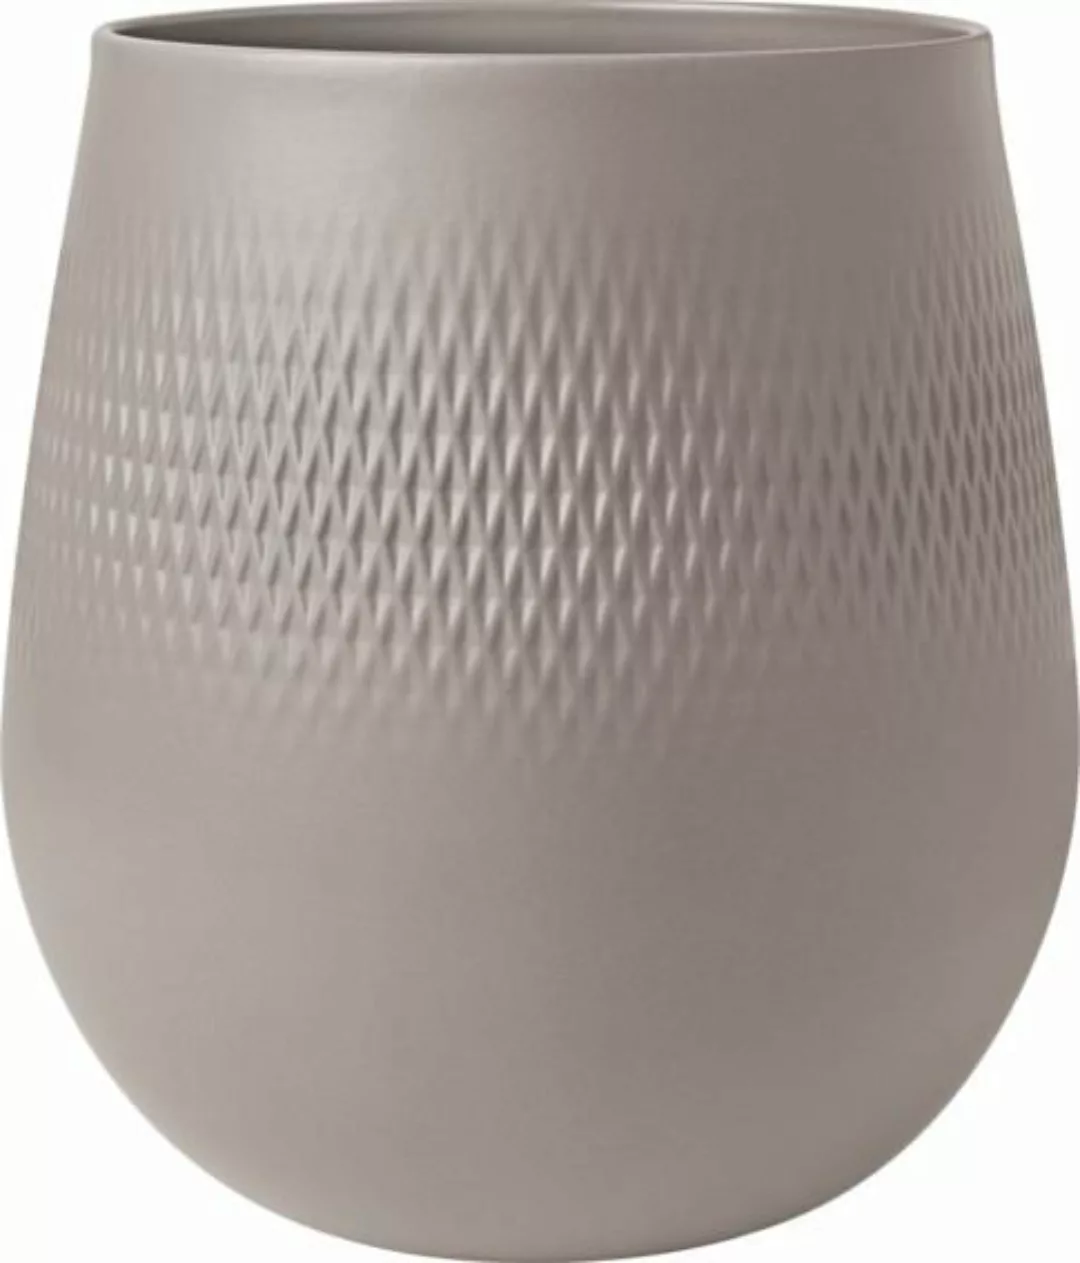 Villeroy & Boch Manufacture Manufacture Collier taupe Vase Carre gross 23 c günstig online kaufen